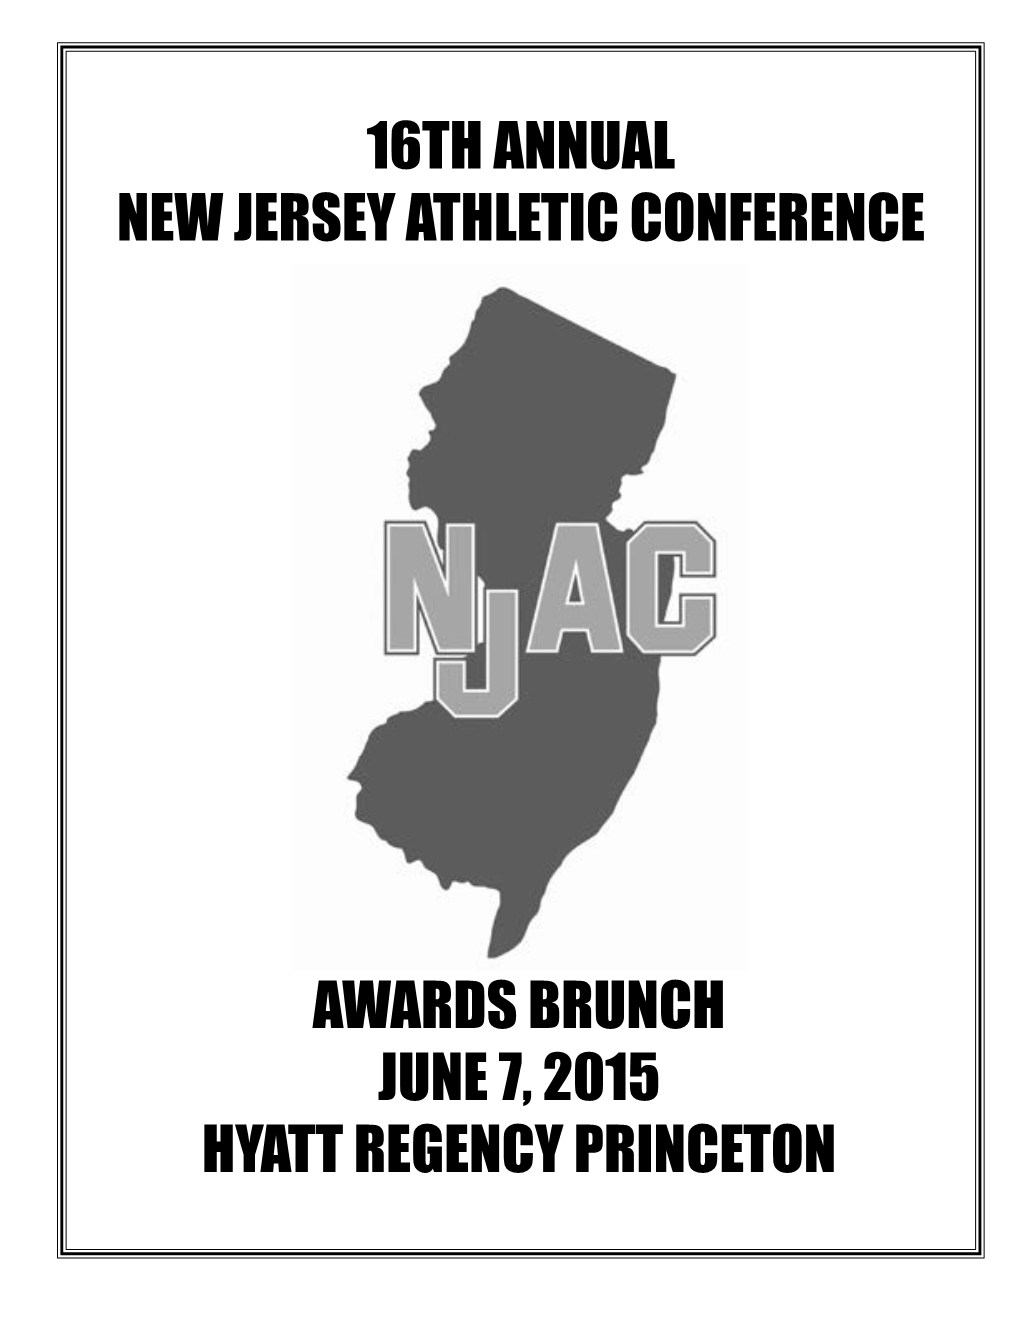 16Th Annual New Jersey Athletic Conference Awards Brunch June 7, 2015 Hyatt Regency Princeton